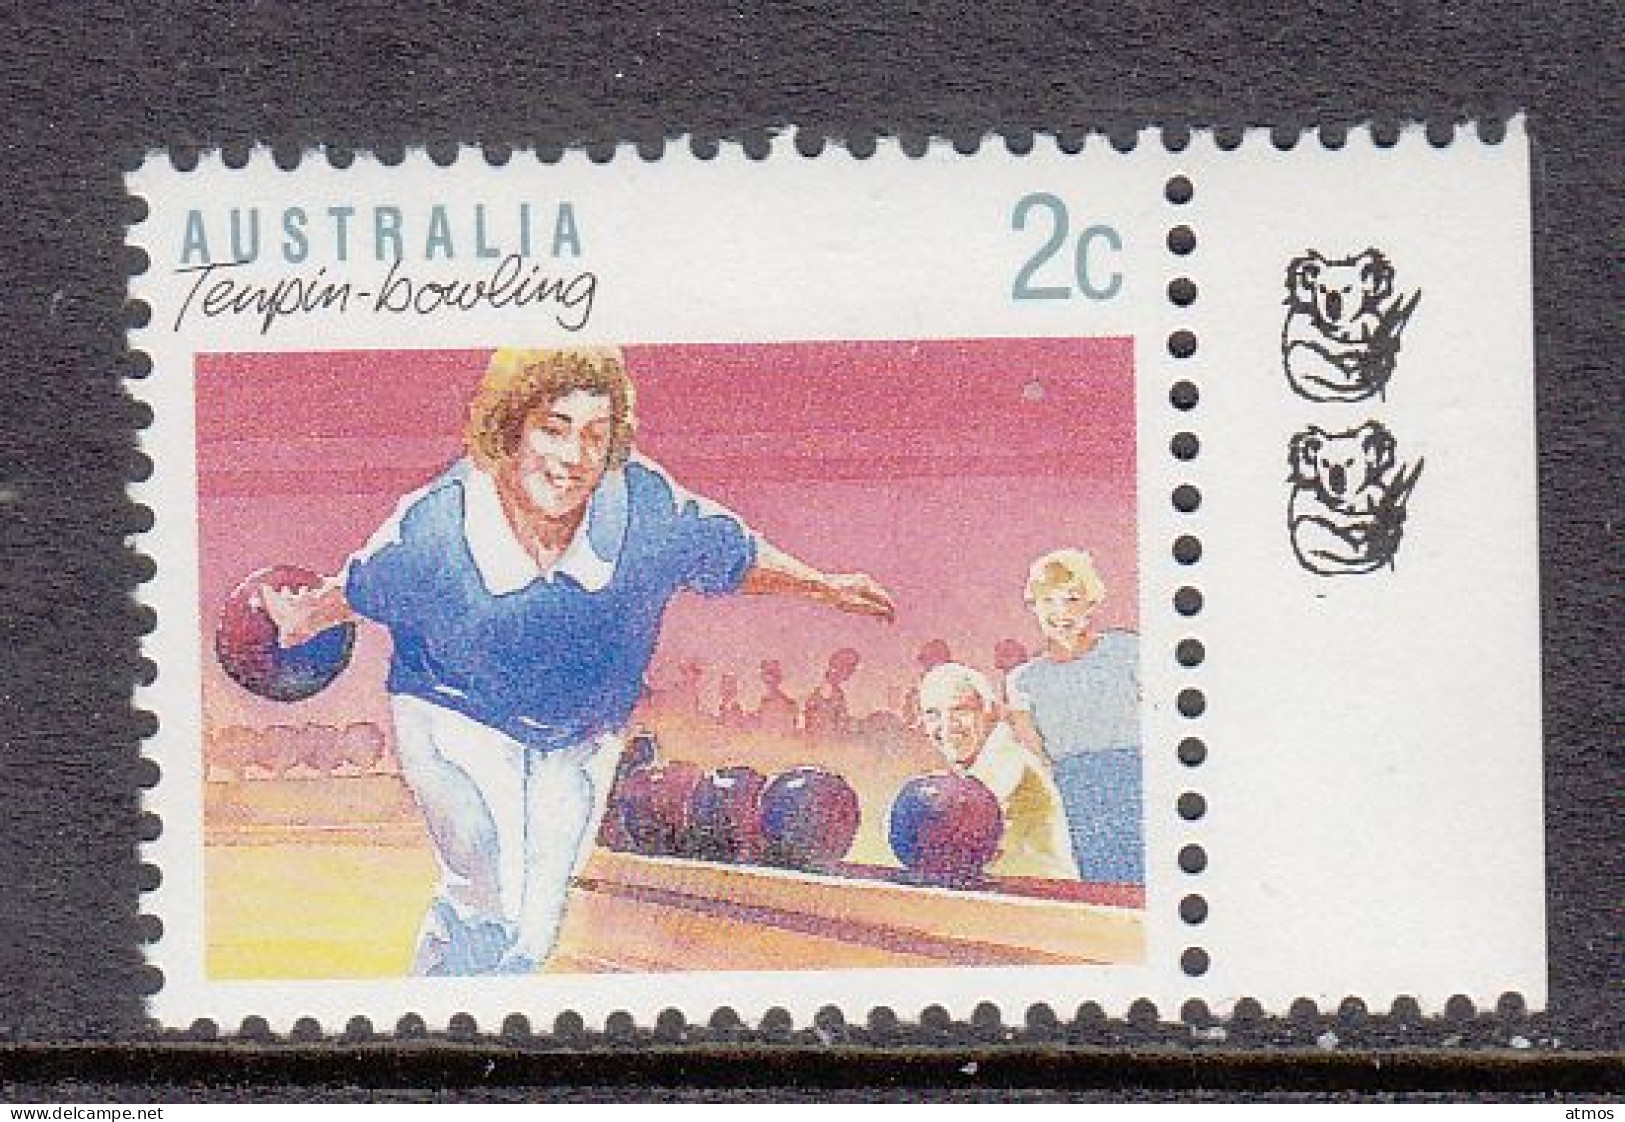 Australia MNH Michel Nr 1140 From 1989 Reprint 2 Koala - Mint Stamps